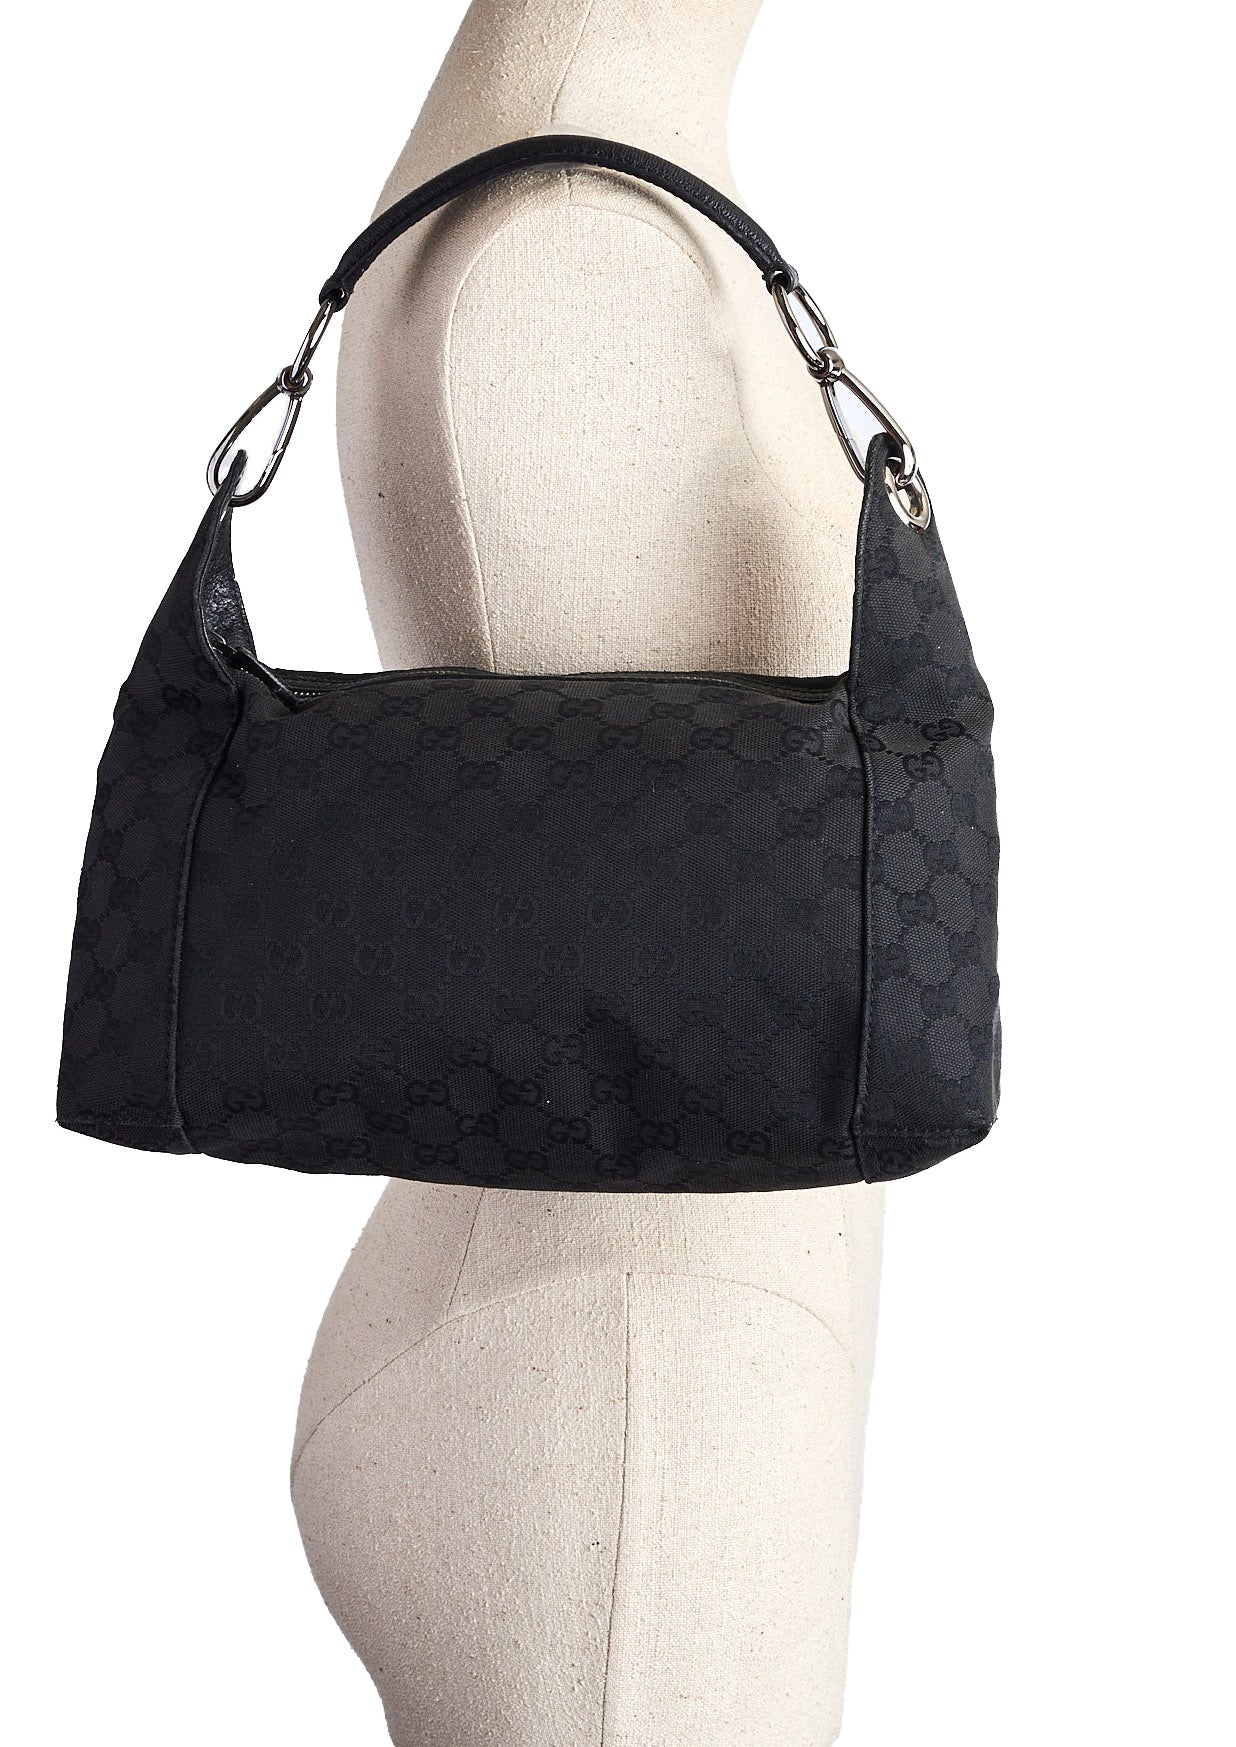 Gucci Guccissima GG Black Leather Hobo / Shoulder Bag 